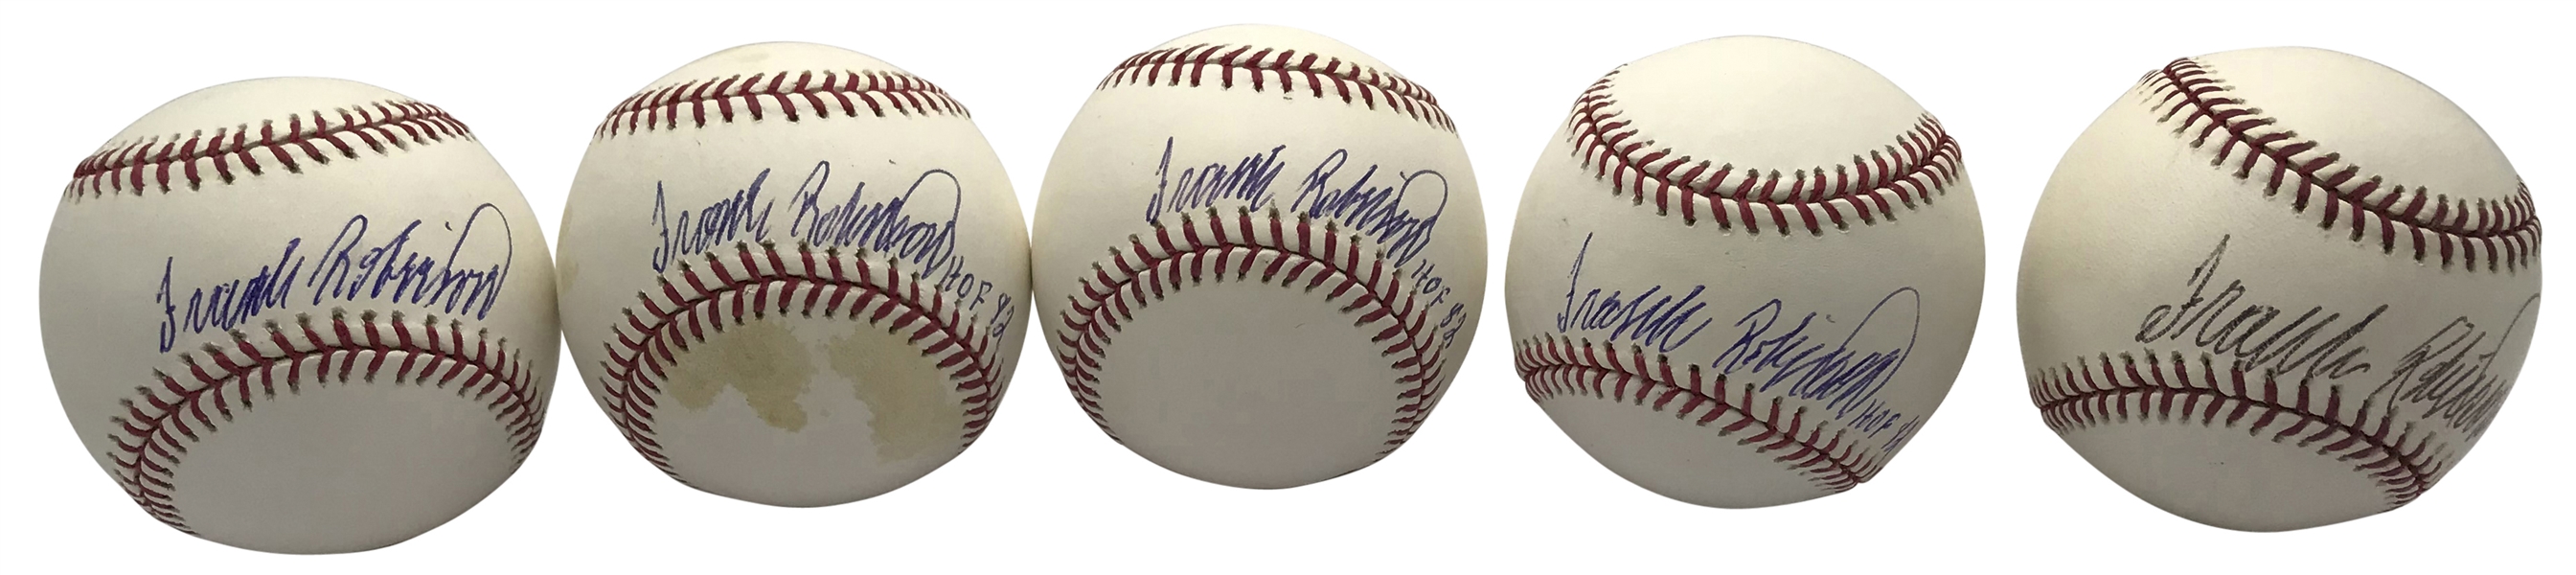 Lot of Nine (9) Frank Robinson Signed OML Baseballs Some w/ Inscriptions! (PSA/DNA & Steiner)